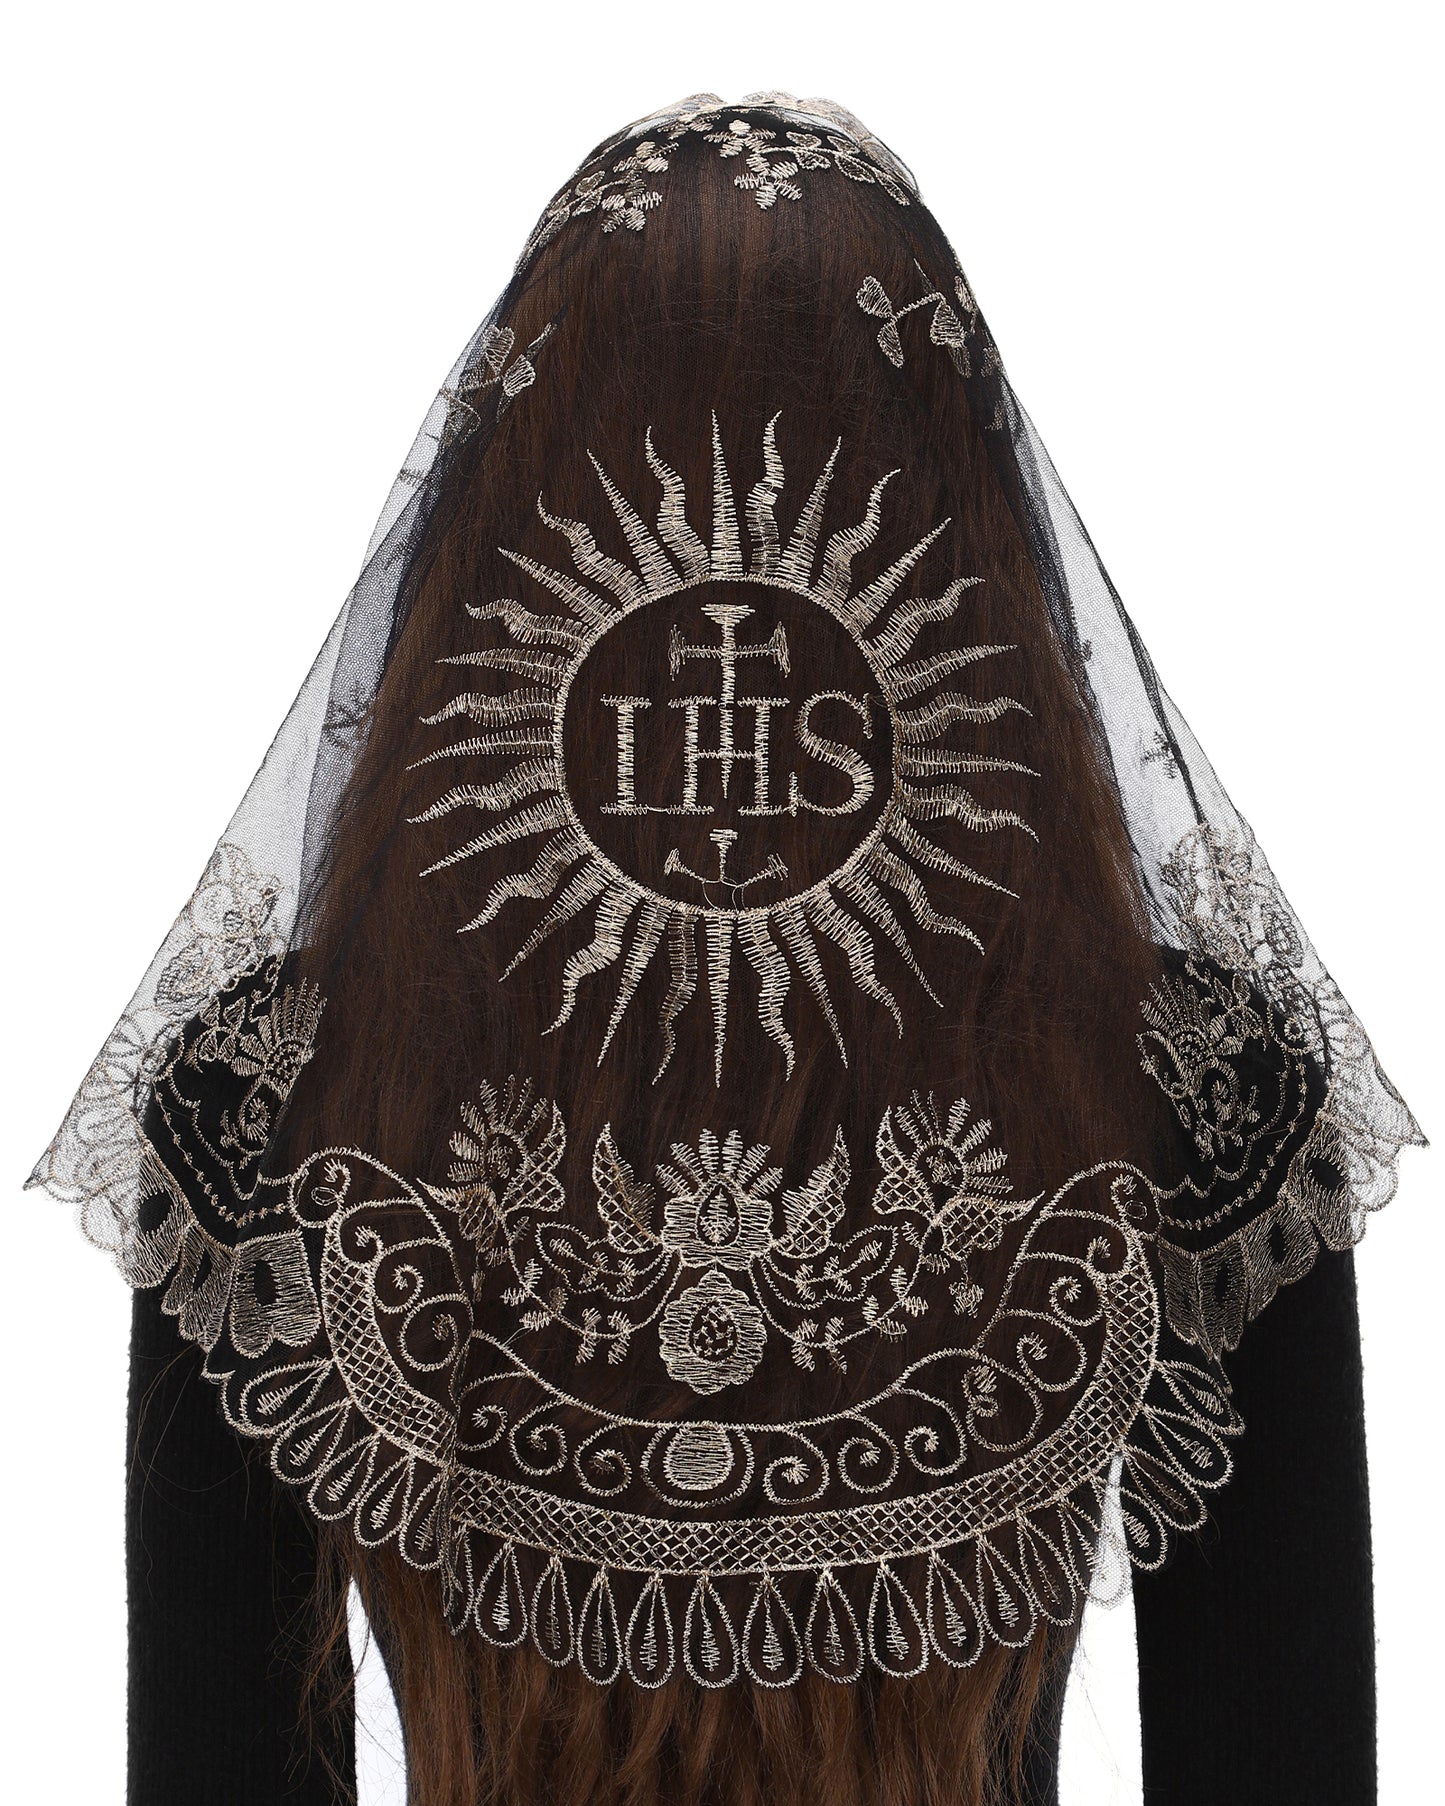 Bozidol Jesus Triangle Lace Veil - Jesus Embroidery Scattered Petals Border Catholic Triangle Ladies Lace Veil